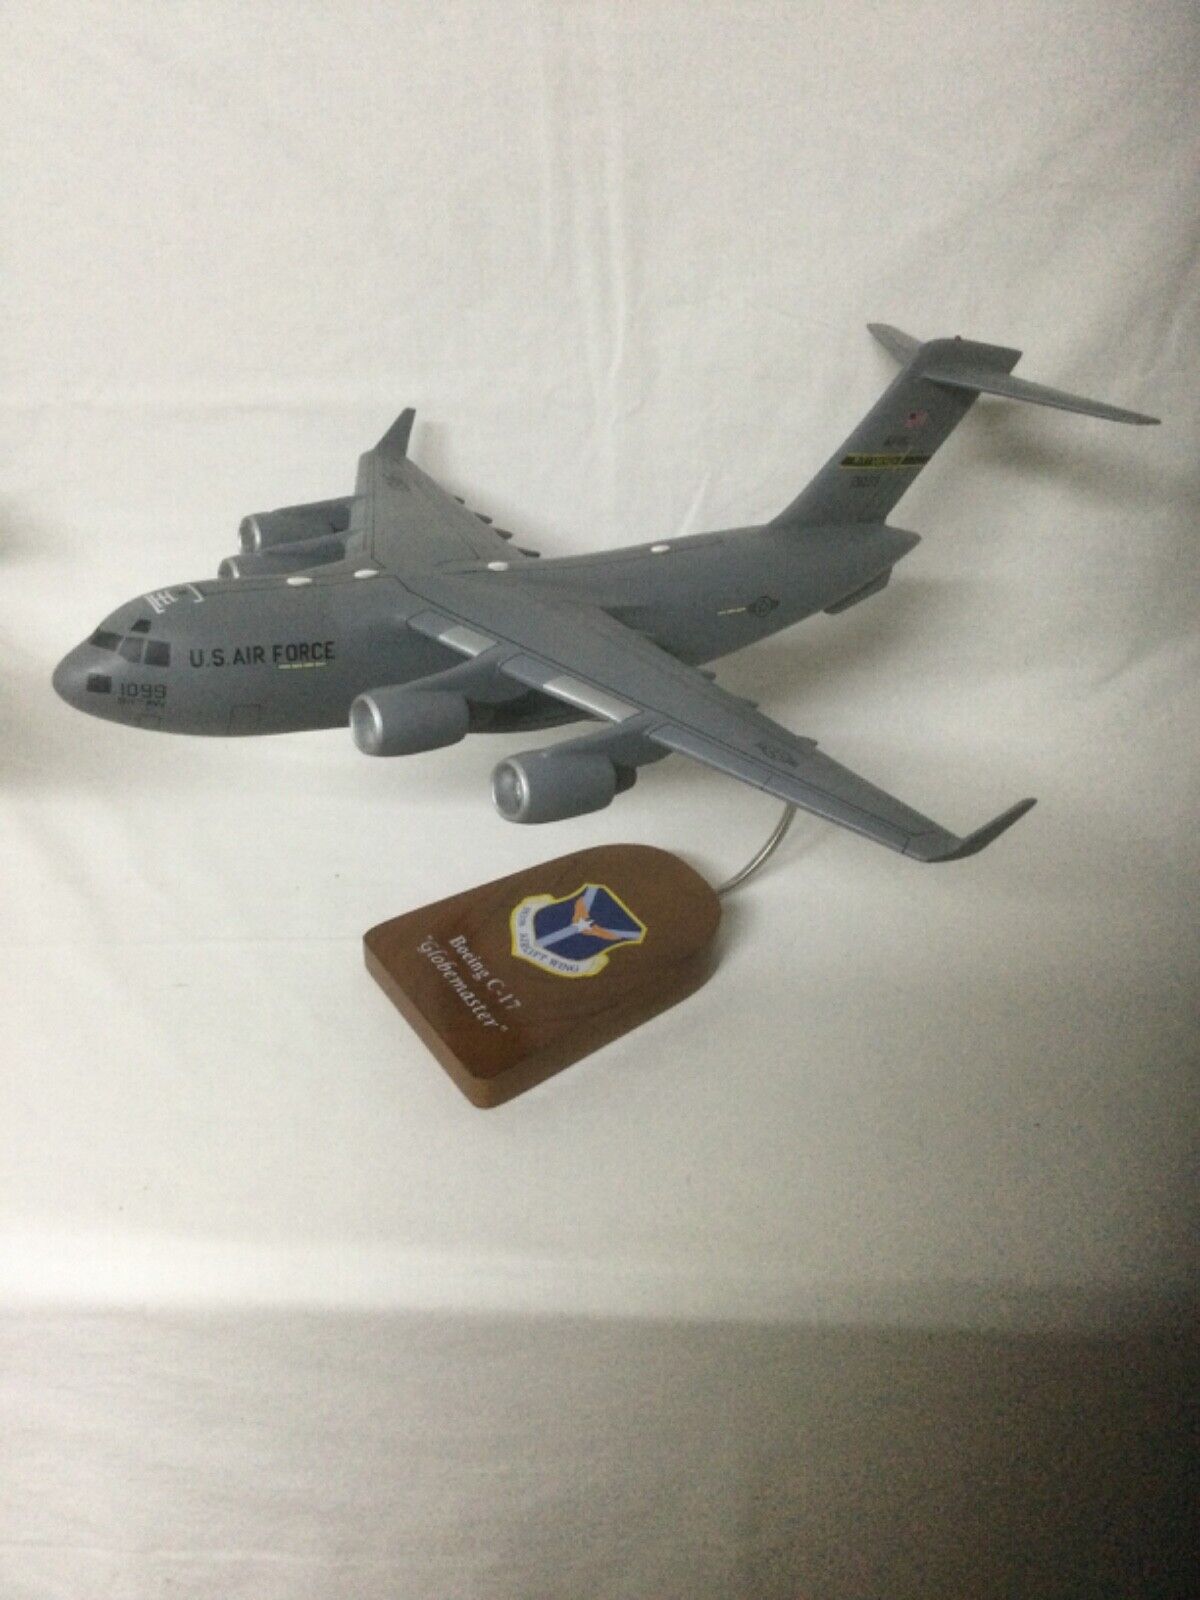 Boeing C-17 “Globemaster III” USAF transport, model aircraft